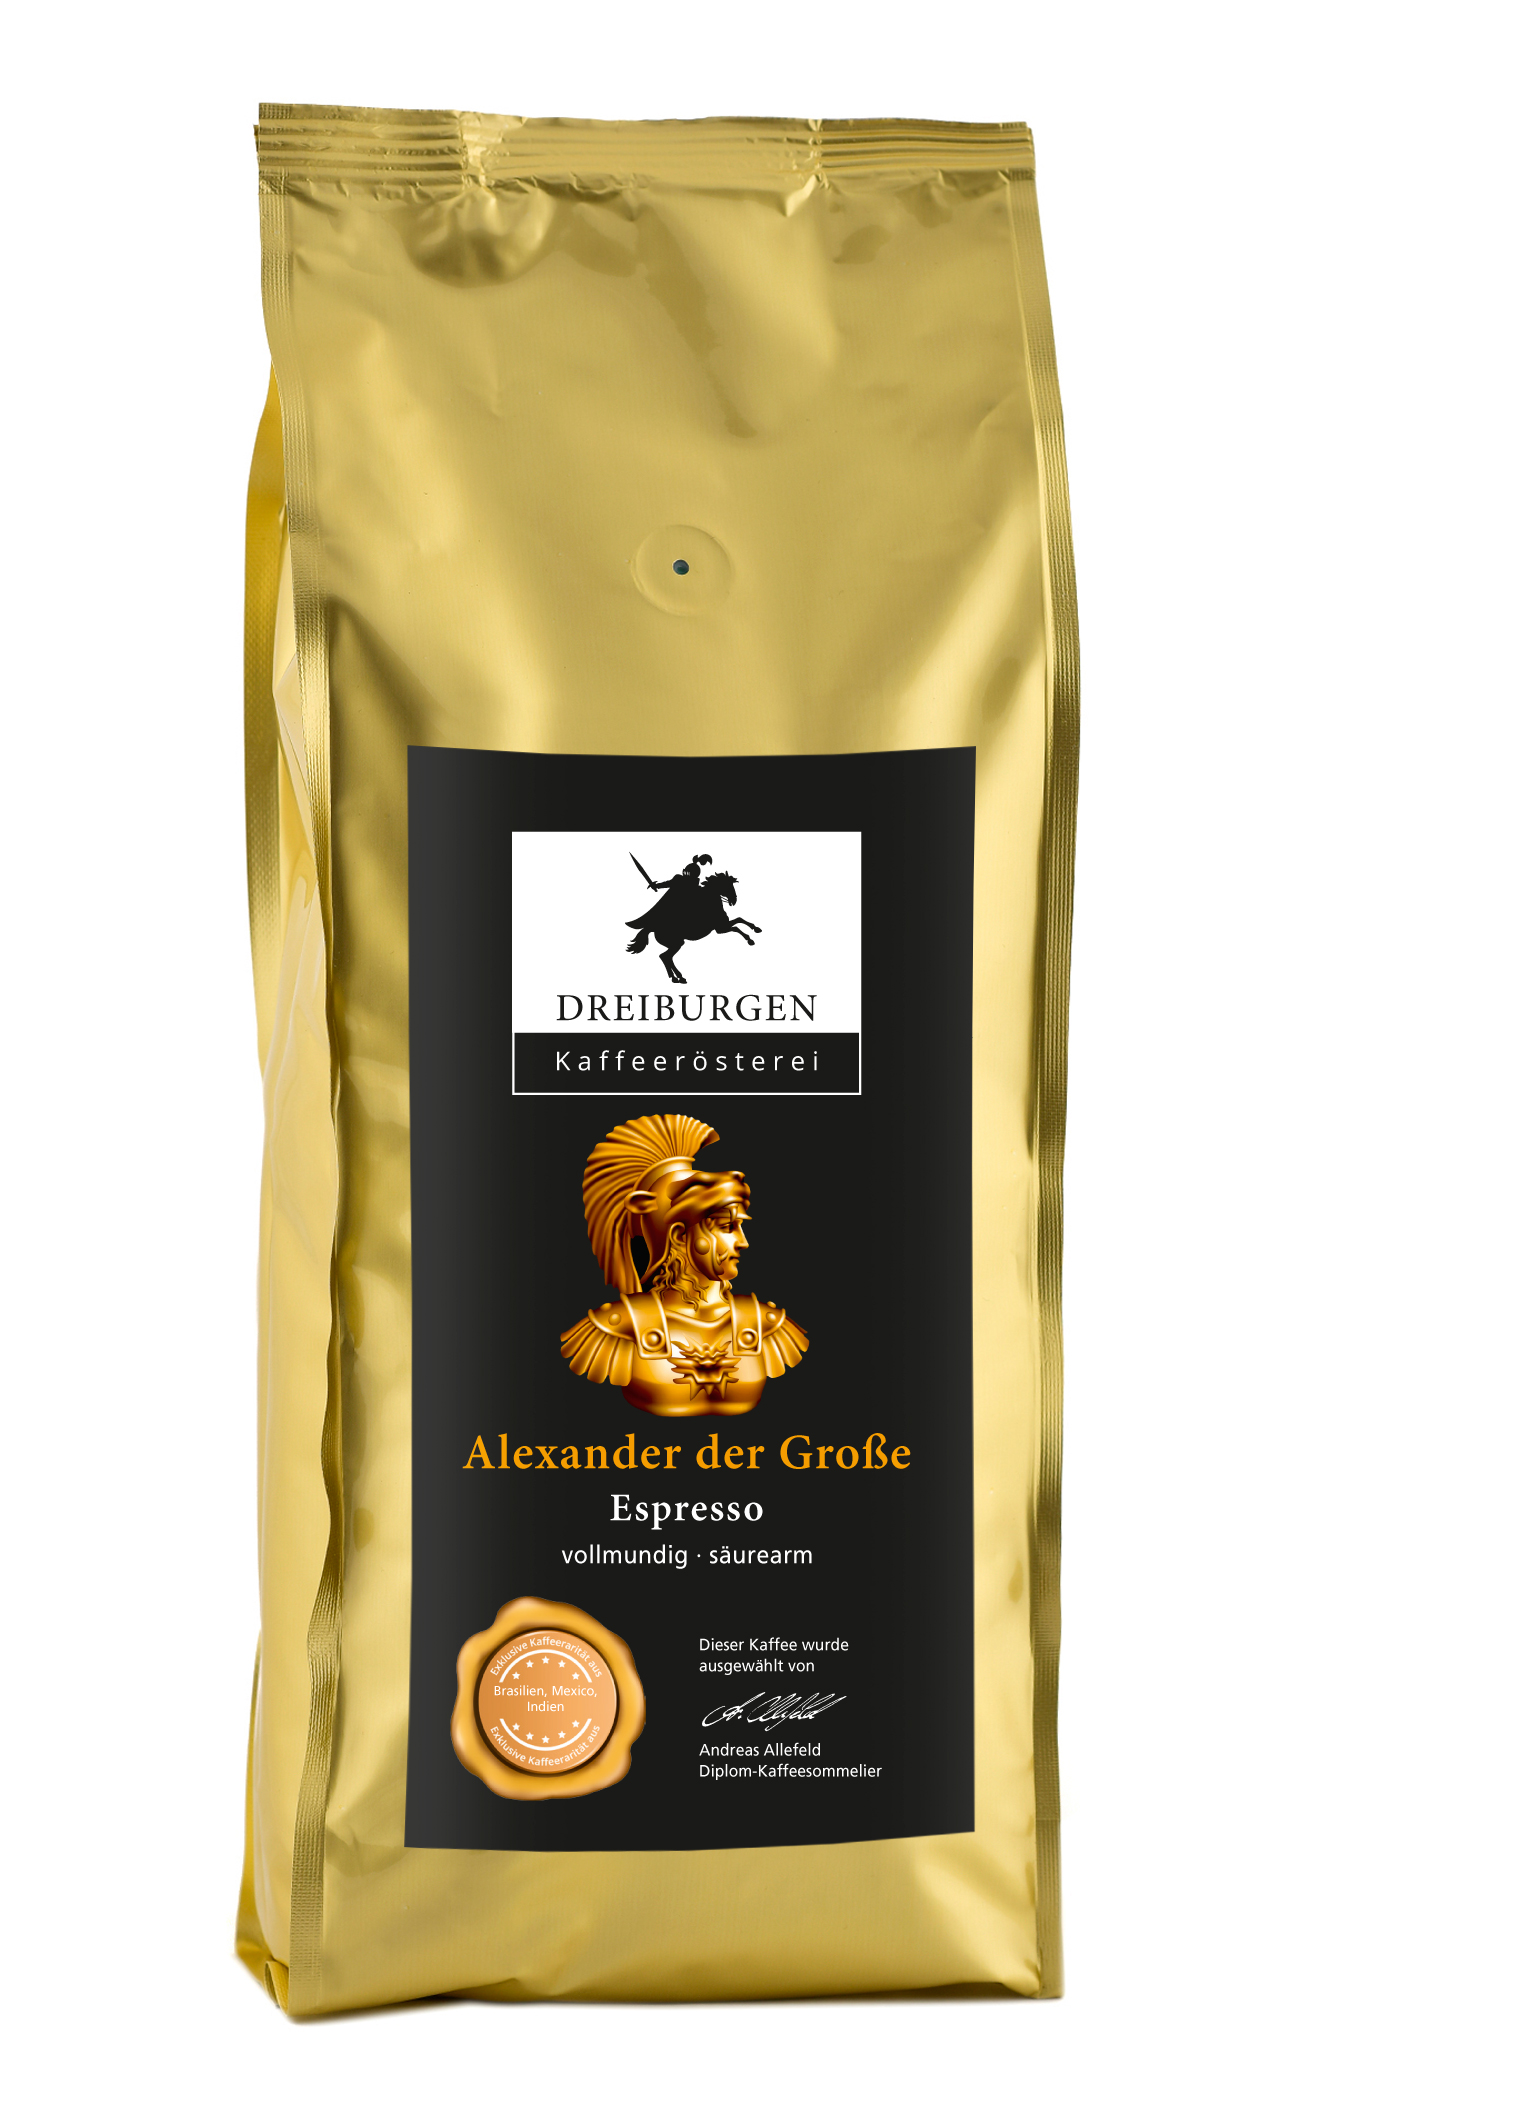 Alexander der Große - Espresso